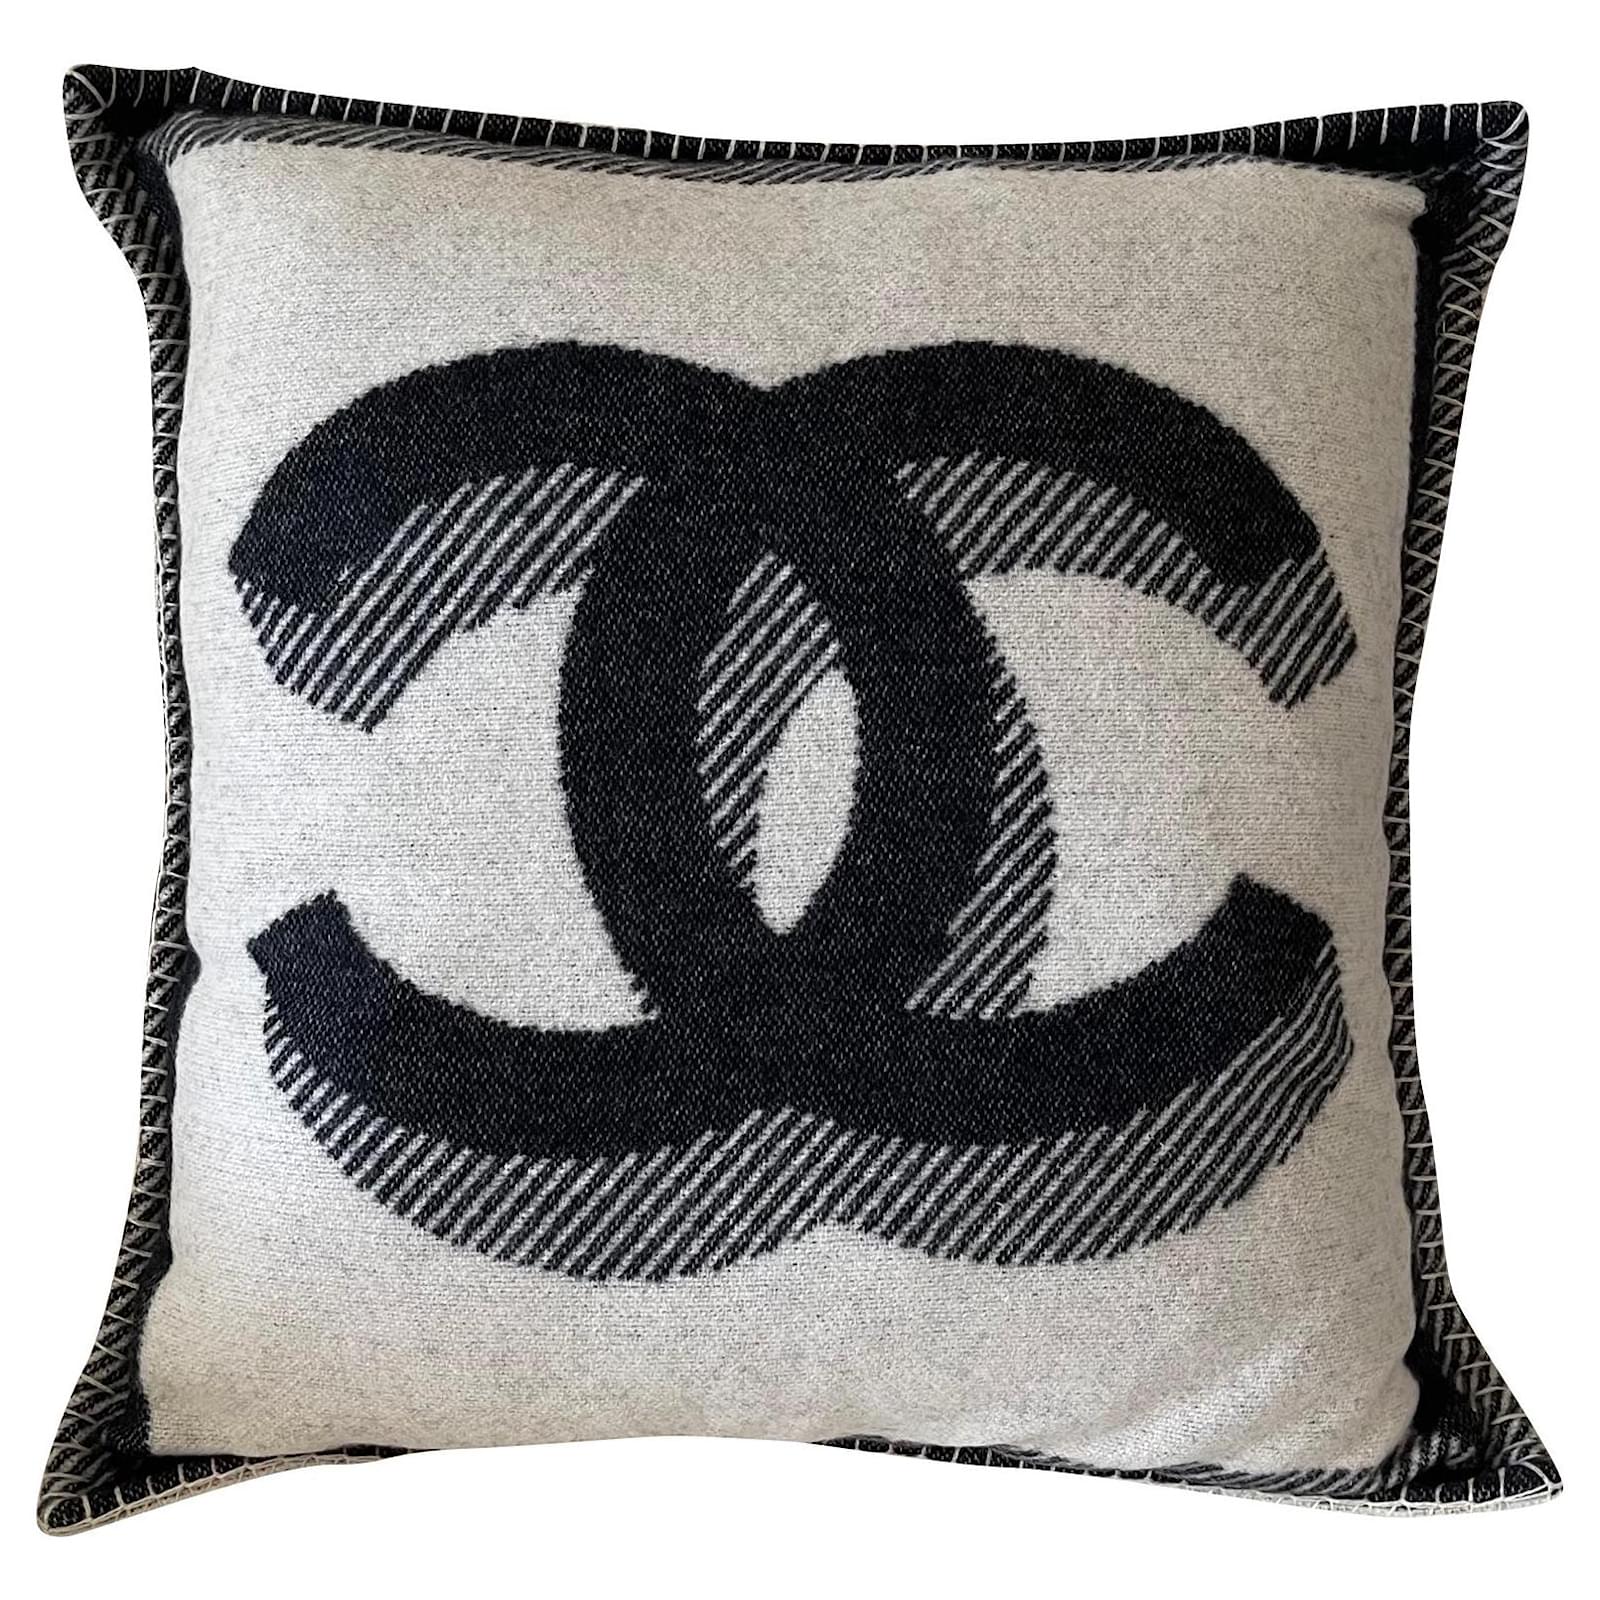 Chanel Cc Logo Navy & White Cashmere Throw Blanket